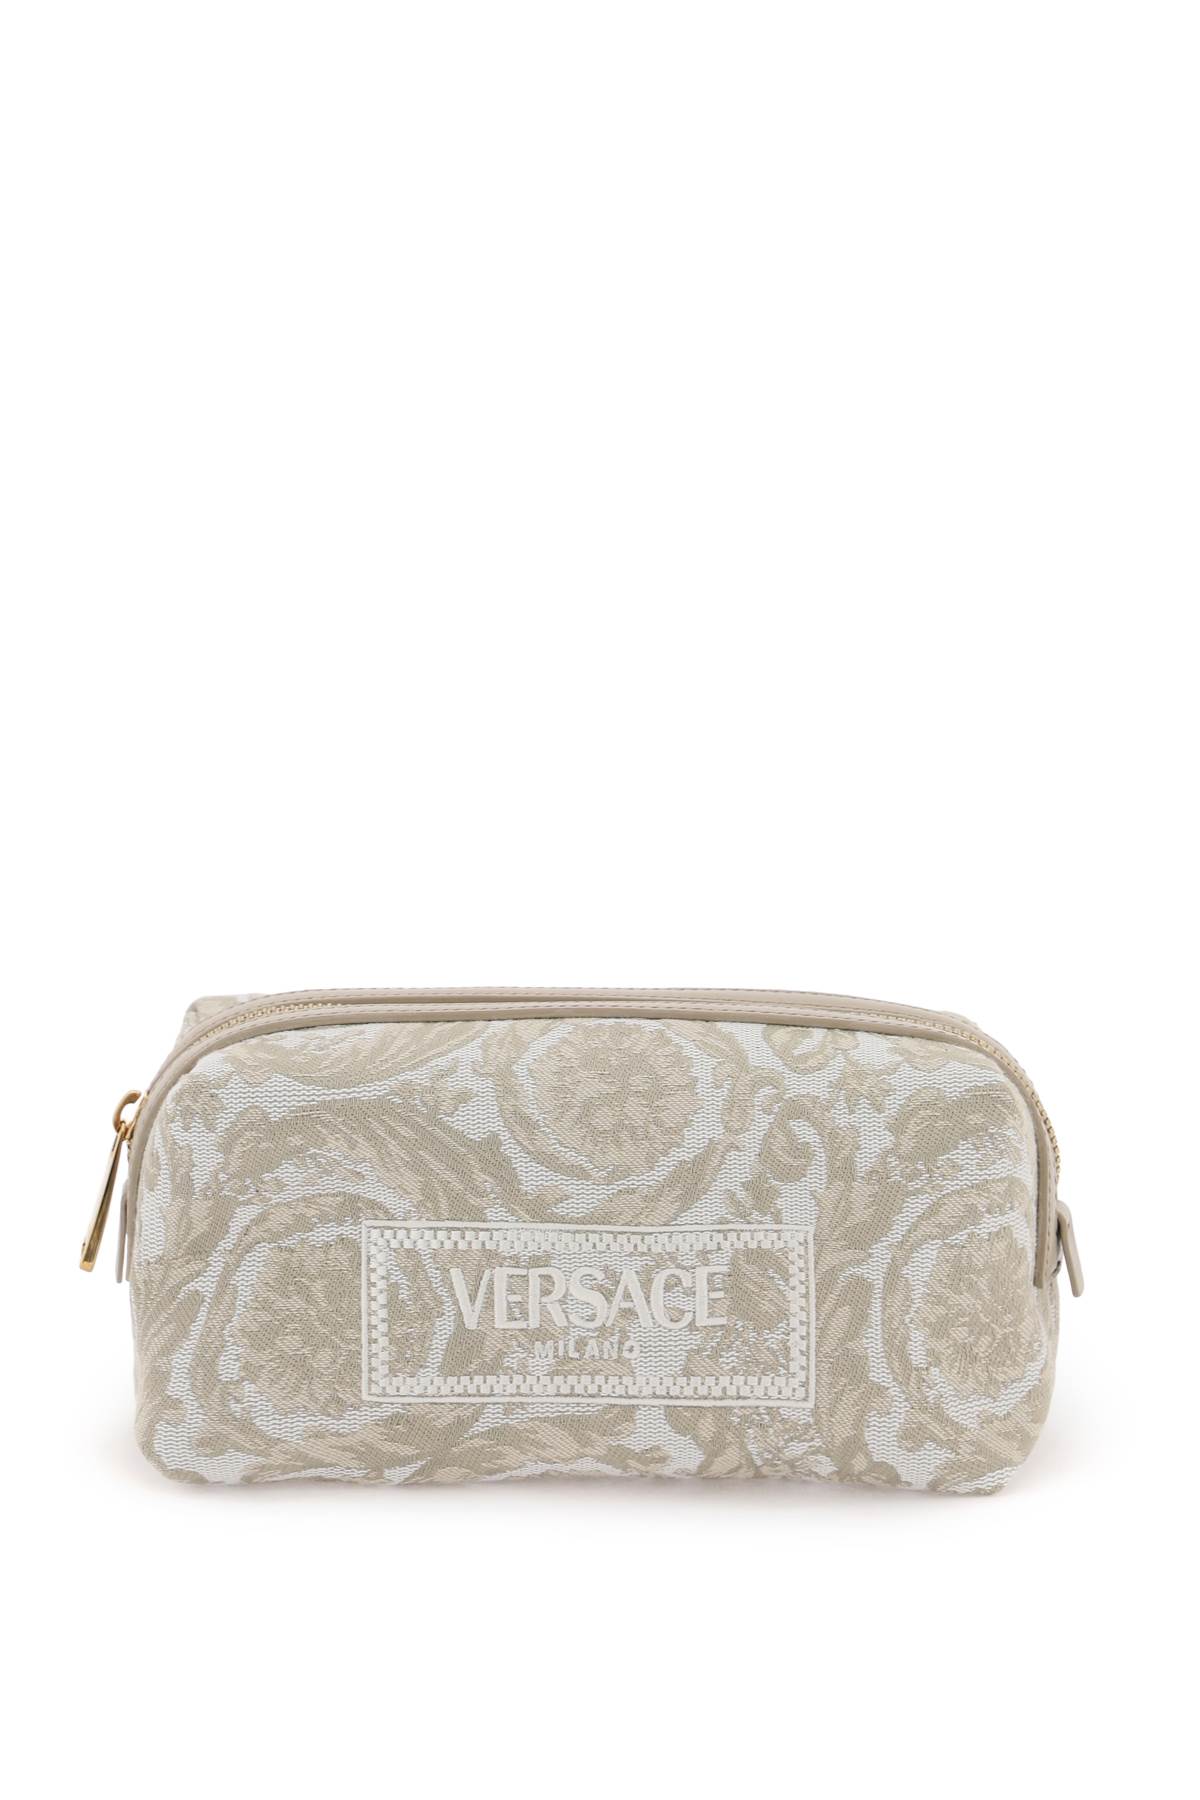 Versace Barocco Vanity Case In Beige Beige  Gold (white)